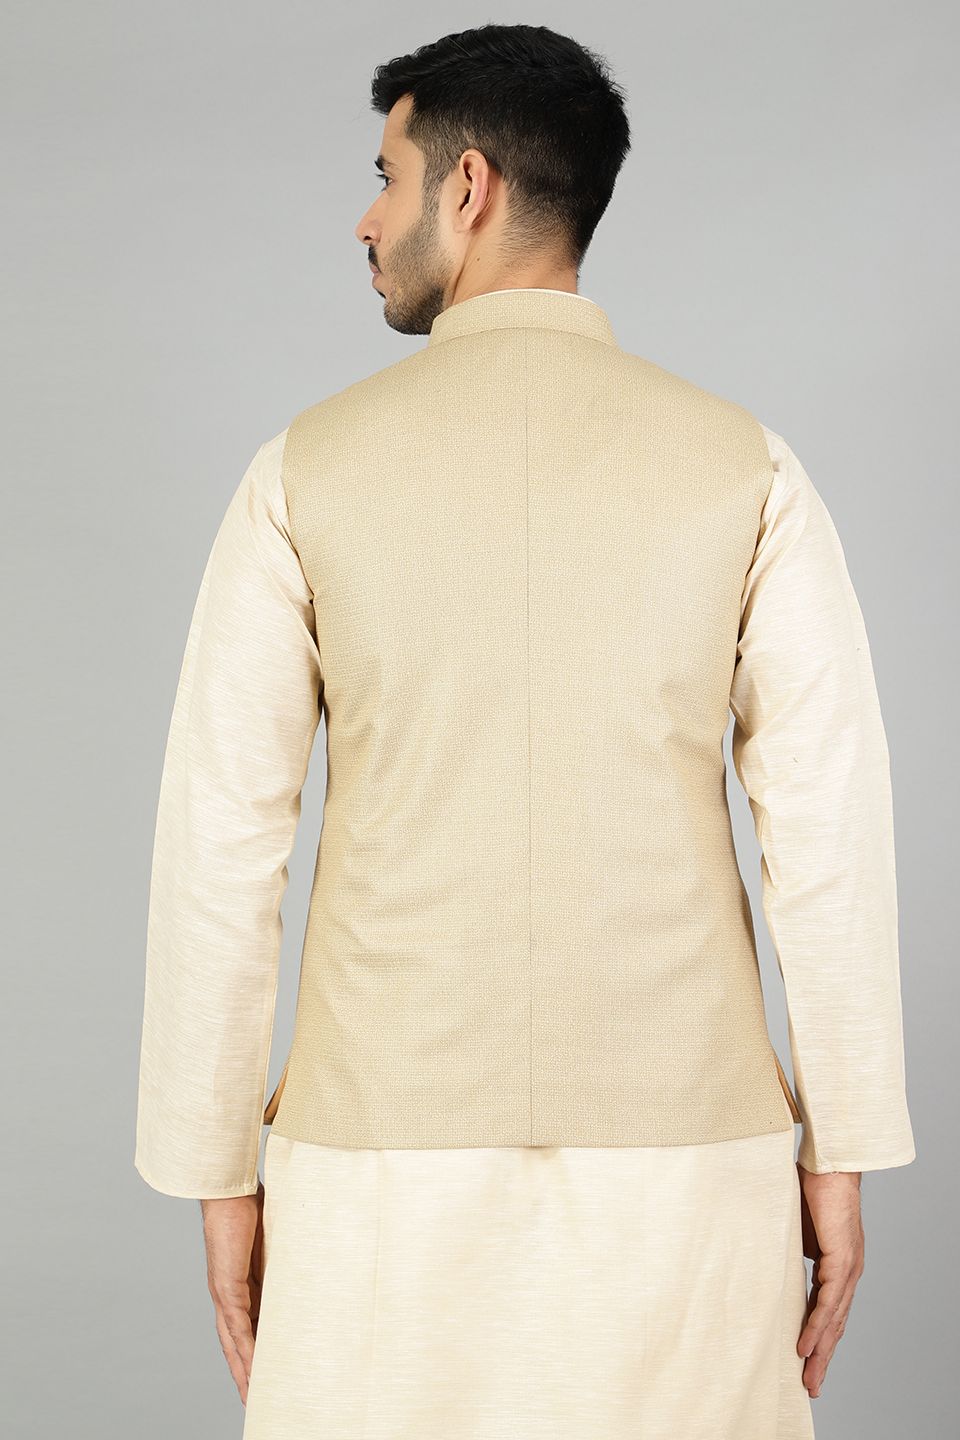 Polyester Cotton Plain Gold Modi Nehru Jacket